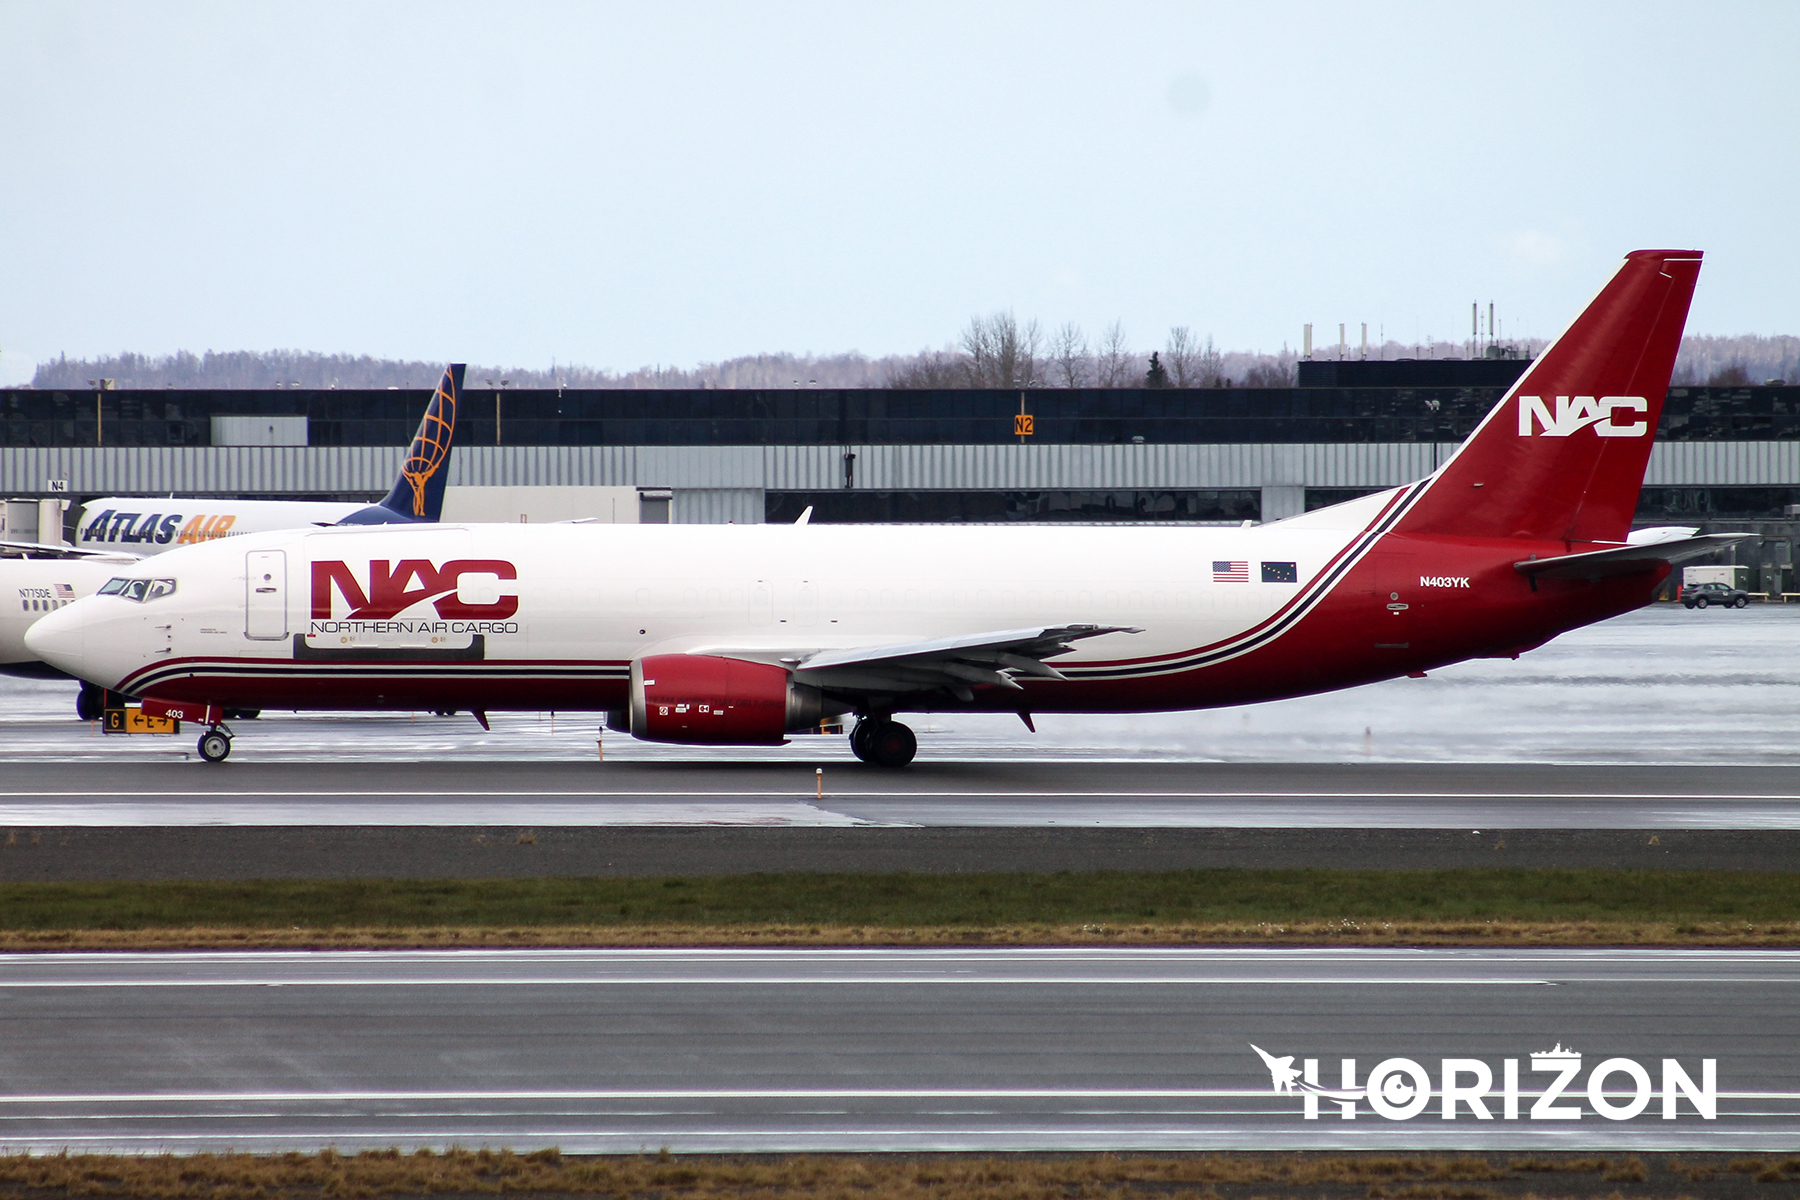 Northern Air Cargo Boeing 737-436F N403YK. Photo: Stephen Borg